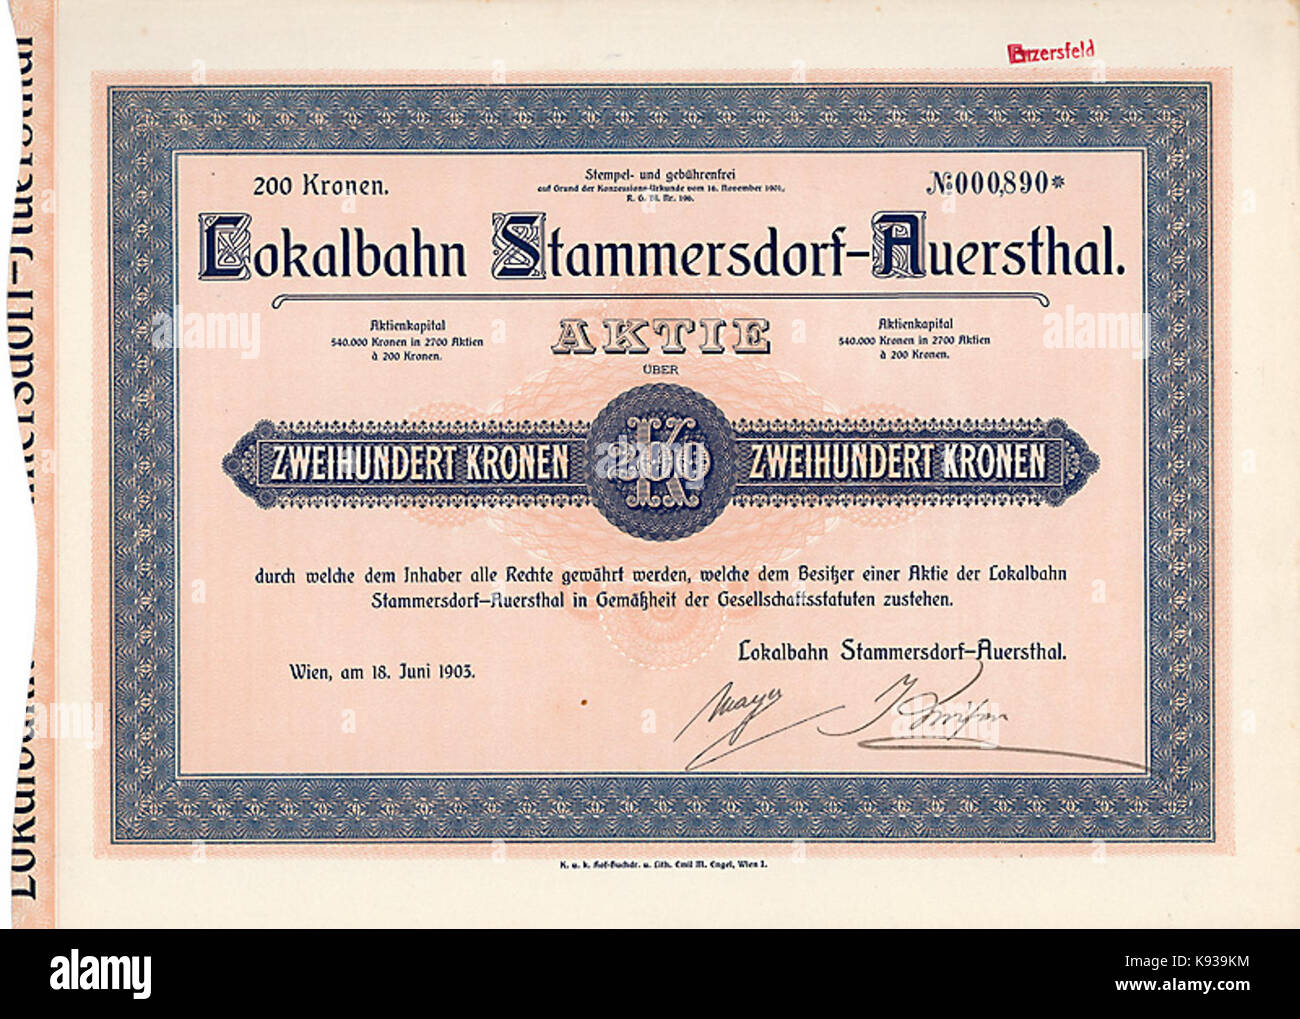 Lokalbahn Stammersdorf Auersthal 200 Kr 1903 Stock Photo